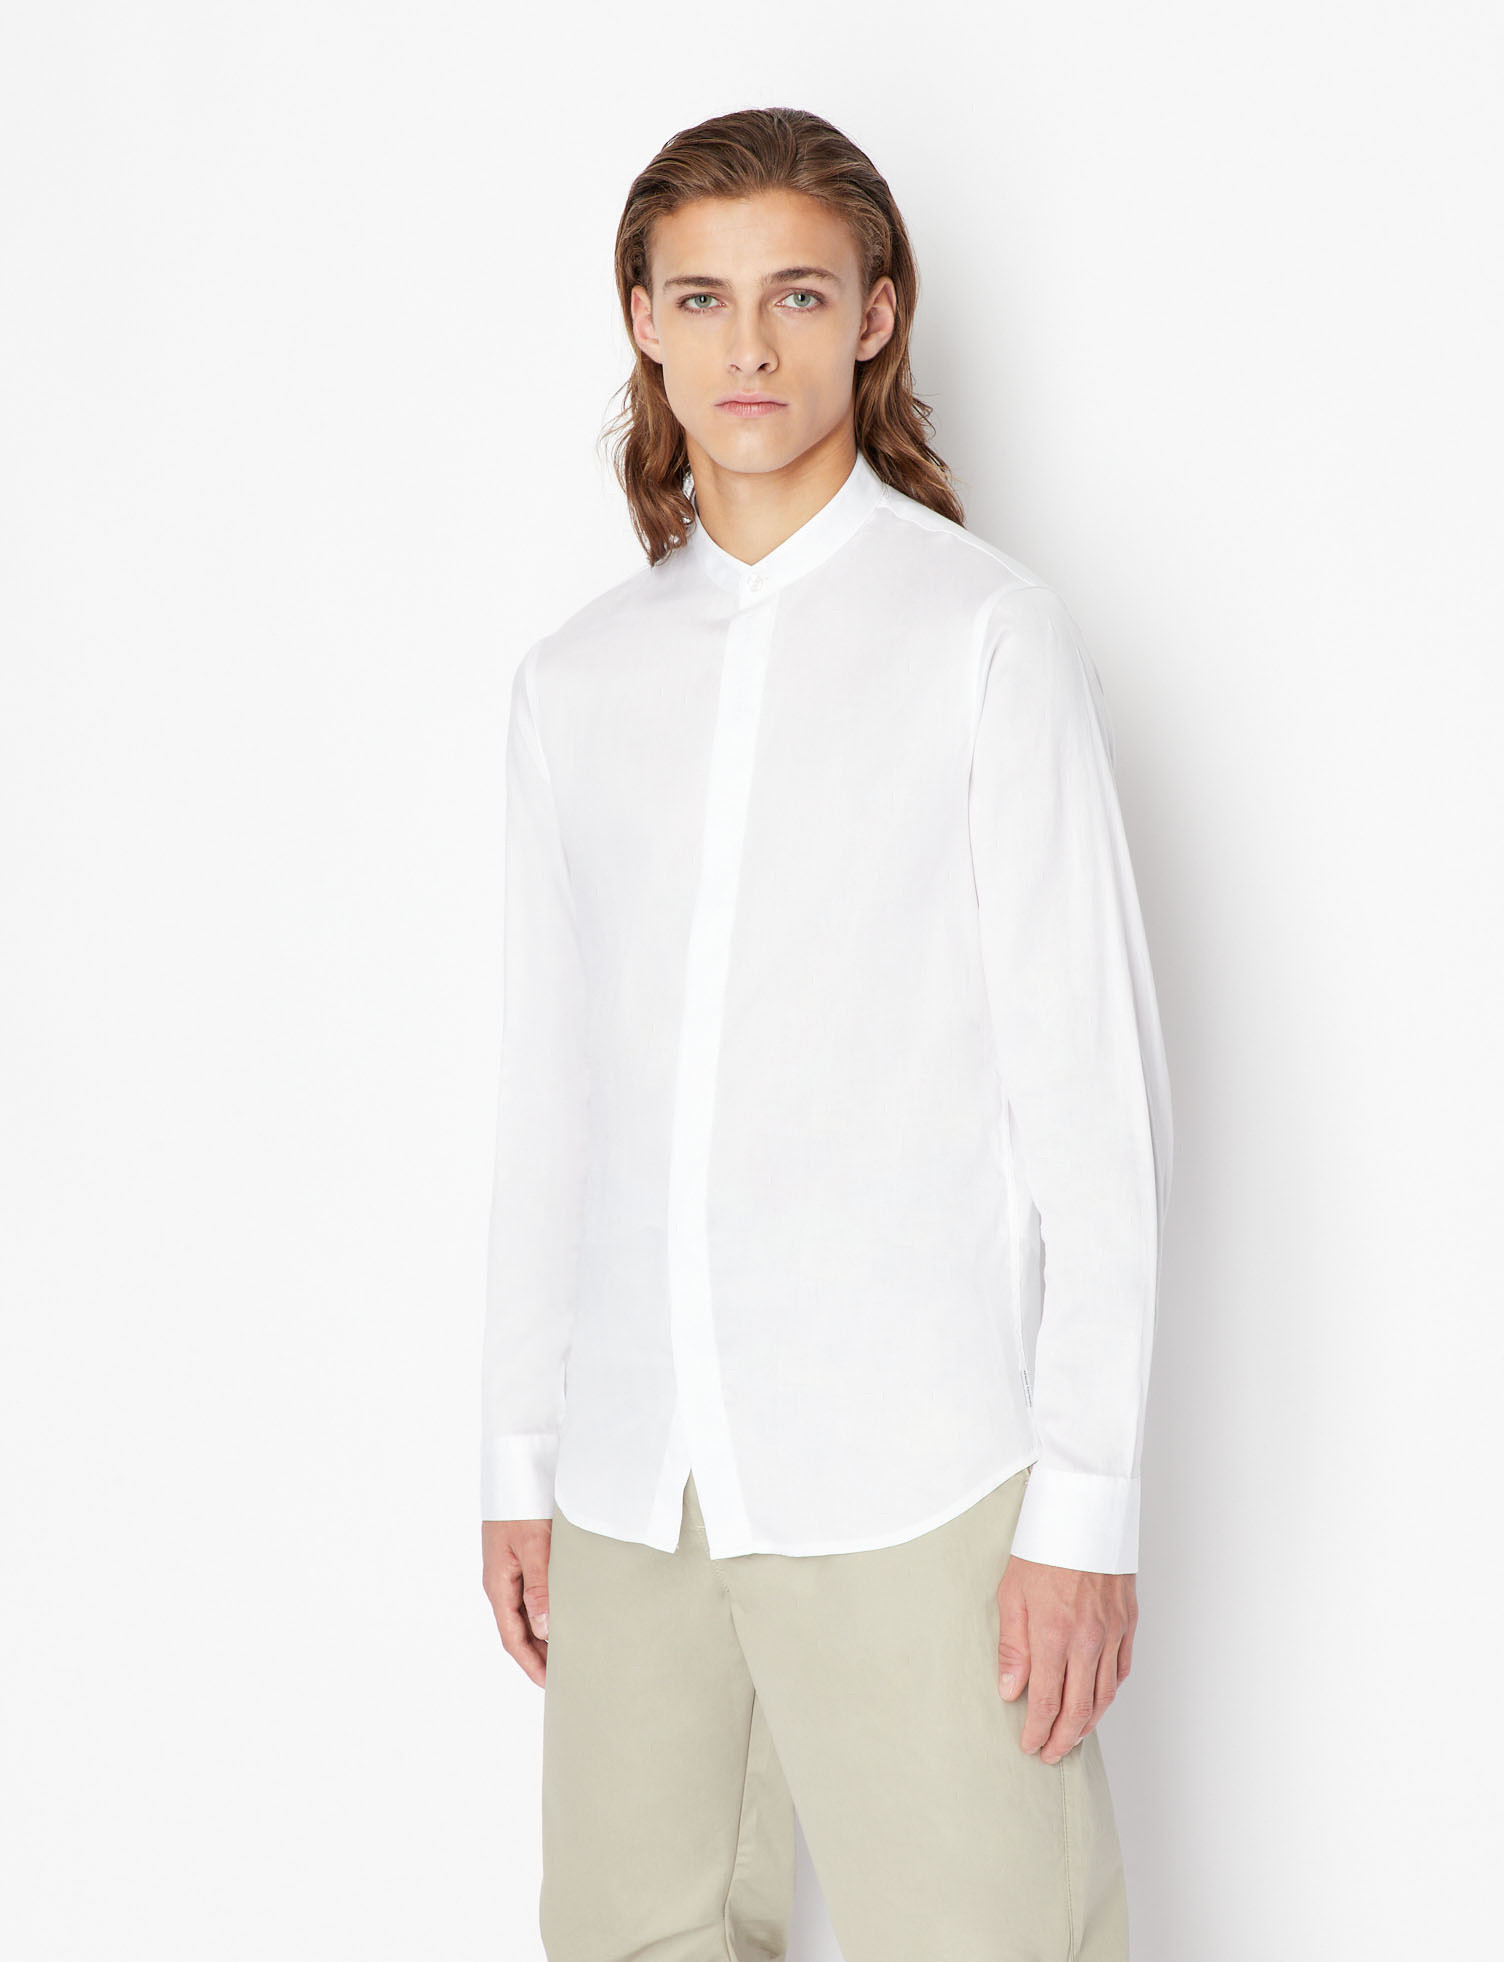 Armani Exchange - Slim fit shirt in cotton, White, large image number 1